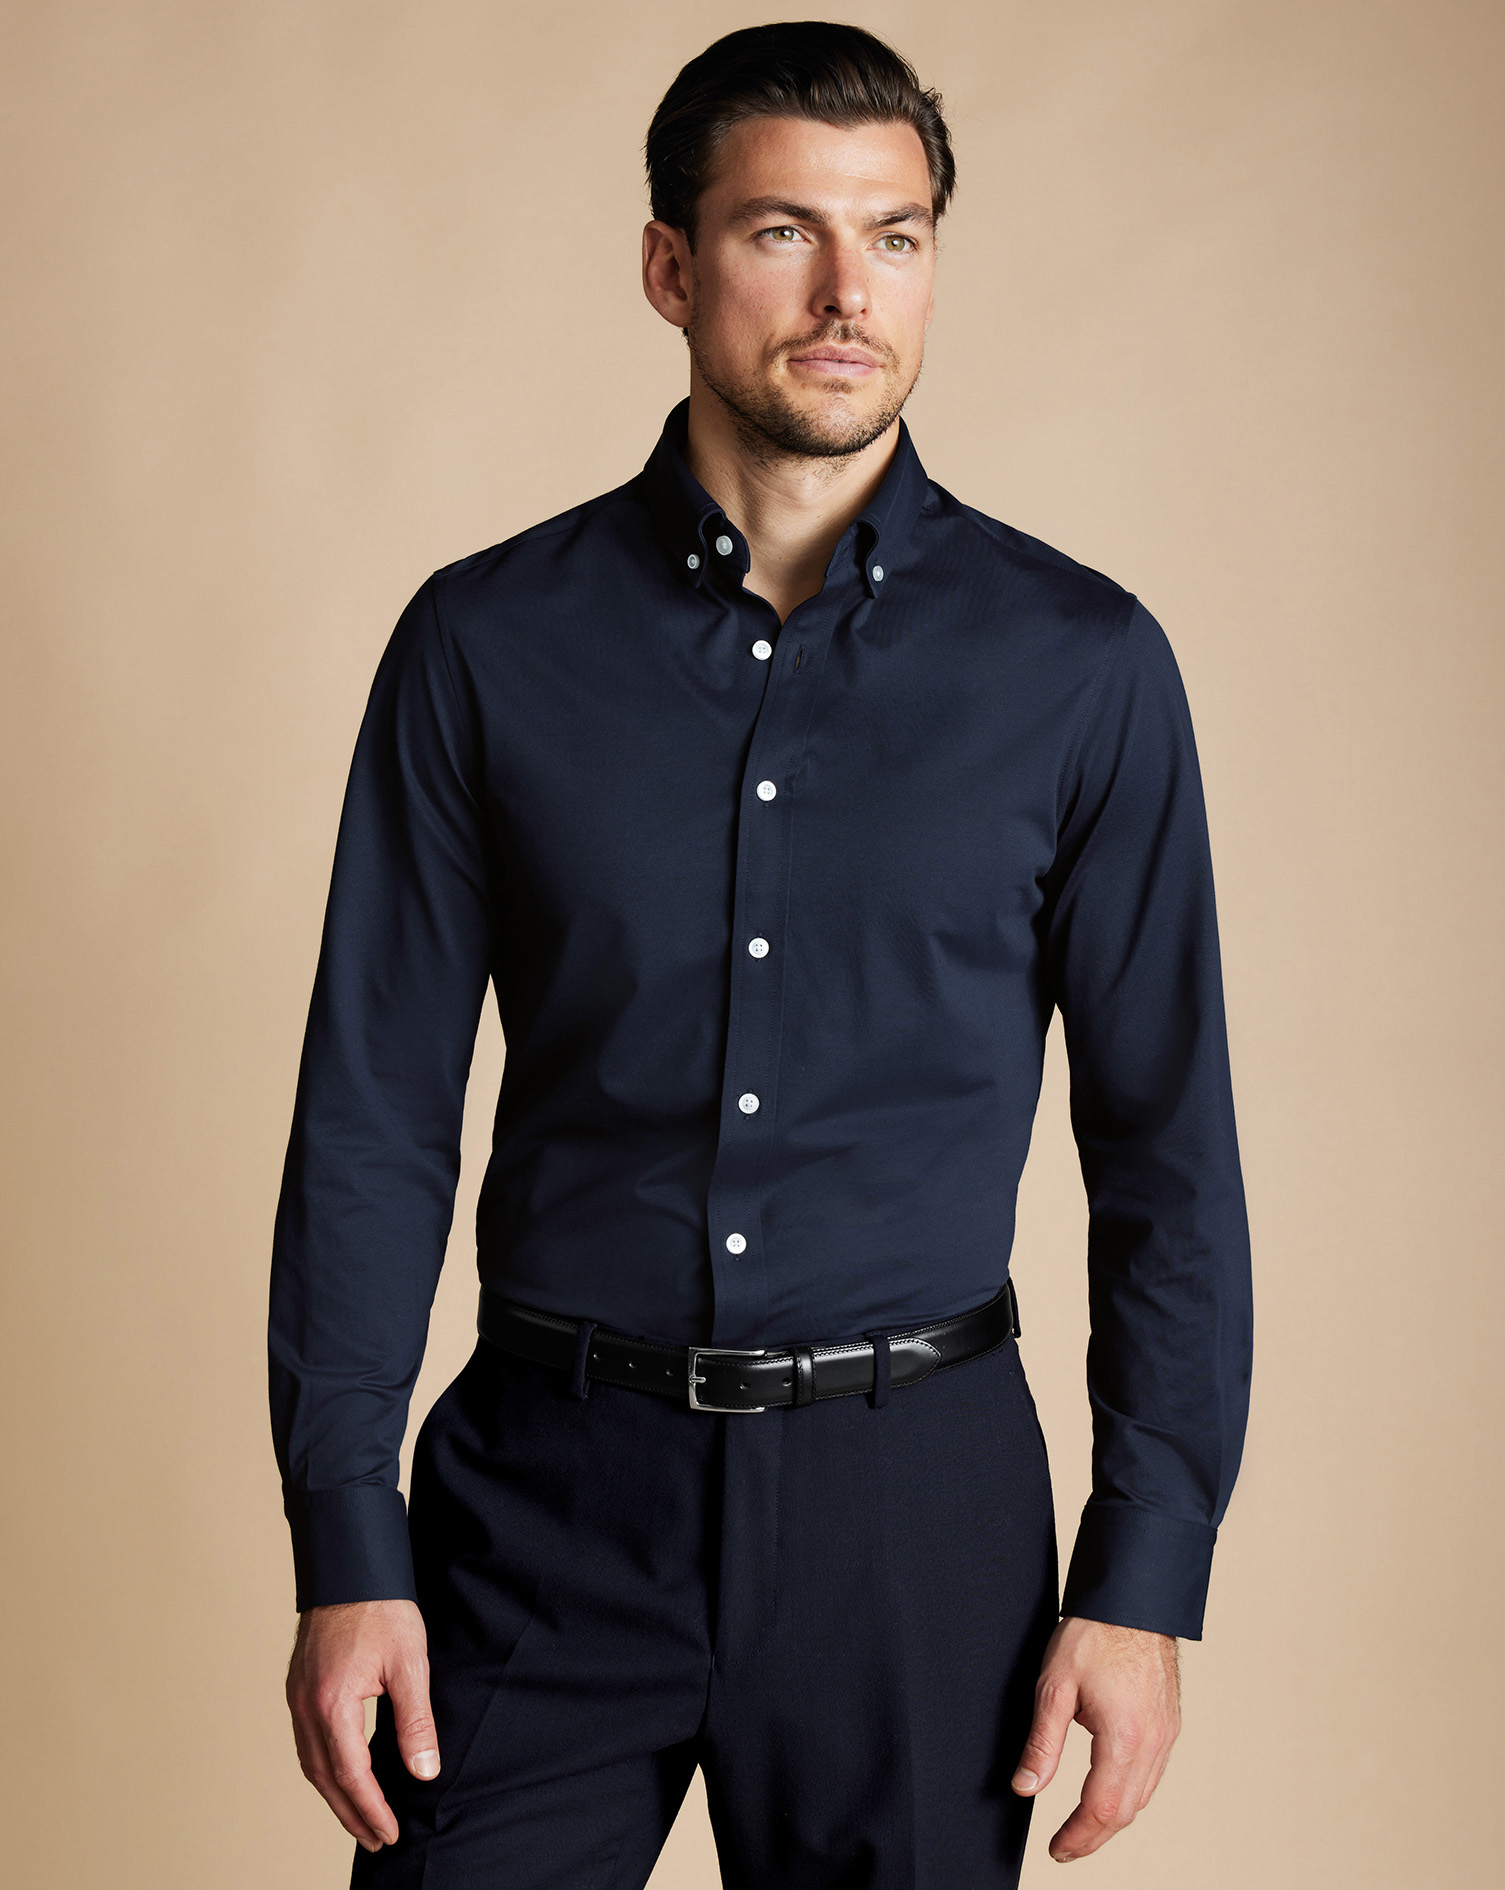 Men's Charles Tyrwhitt 4-Way Stretch Jersey Casual Shirt - Navy Blue Size Large Cotton
